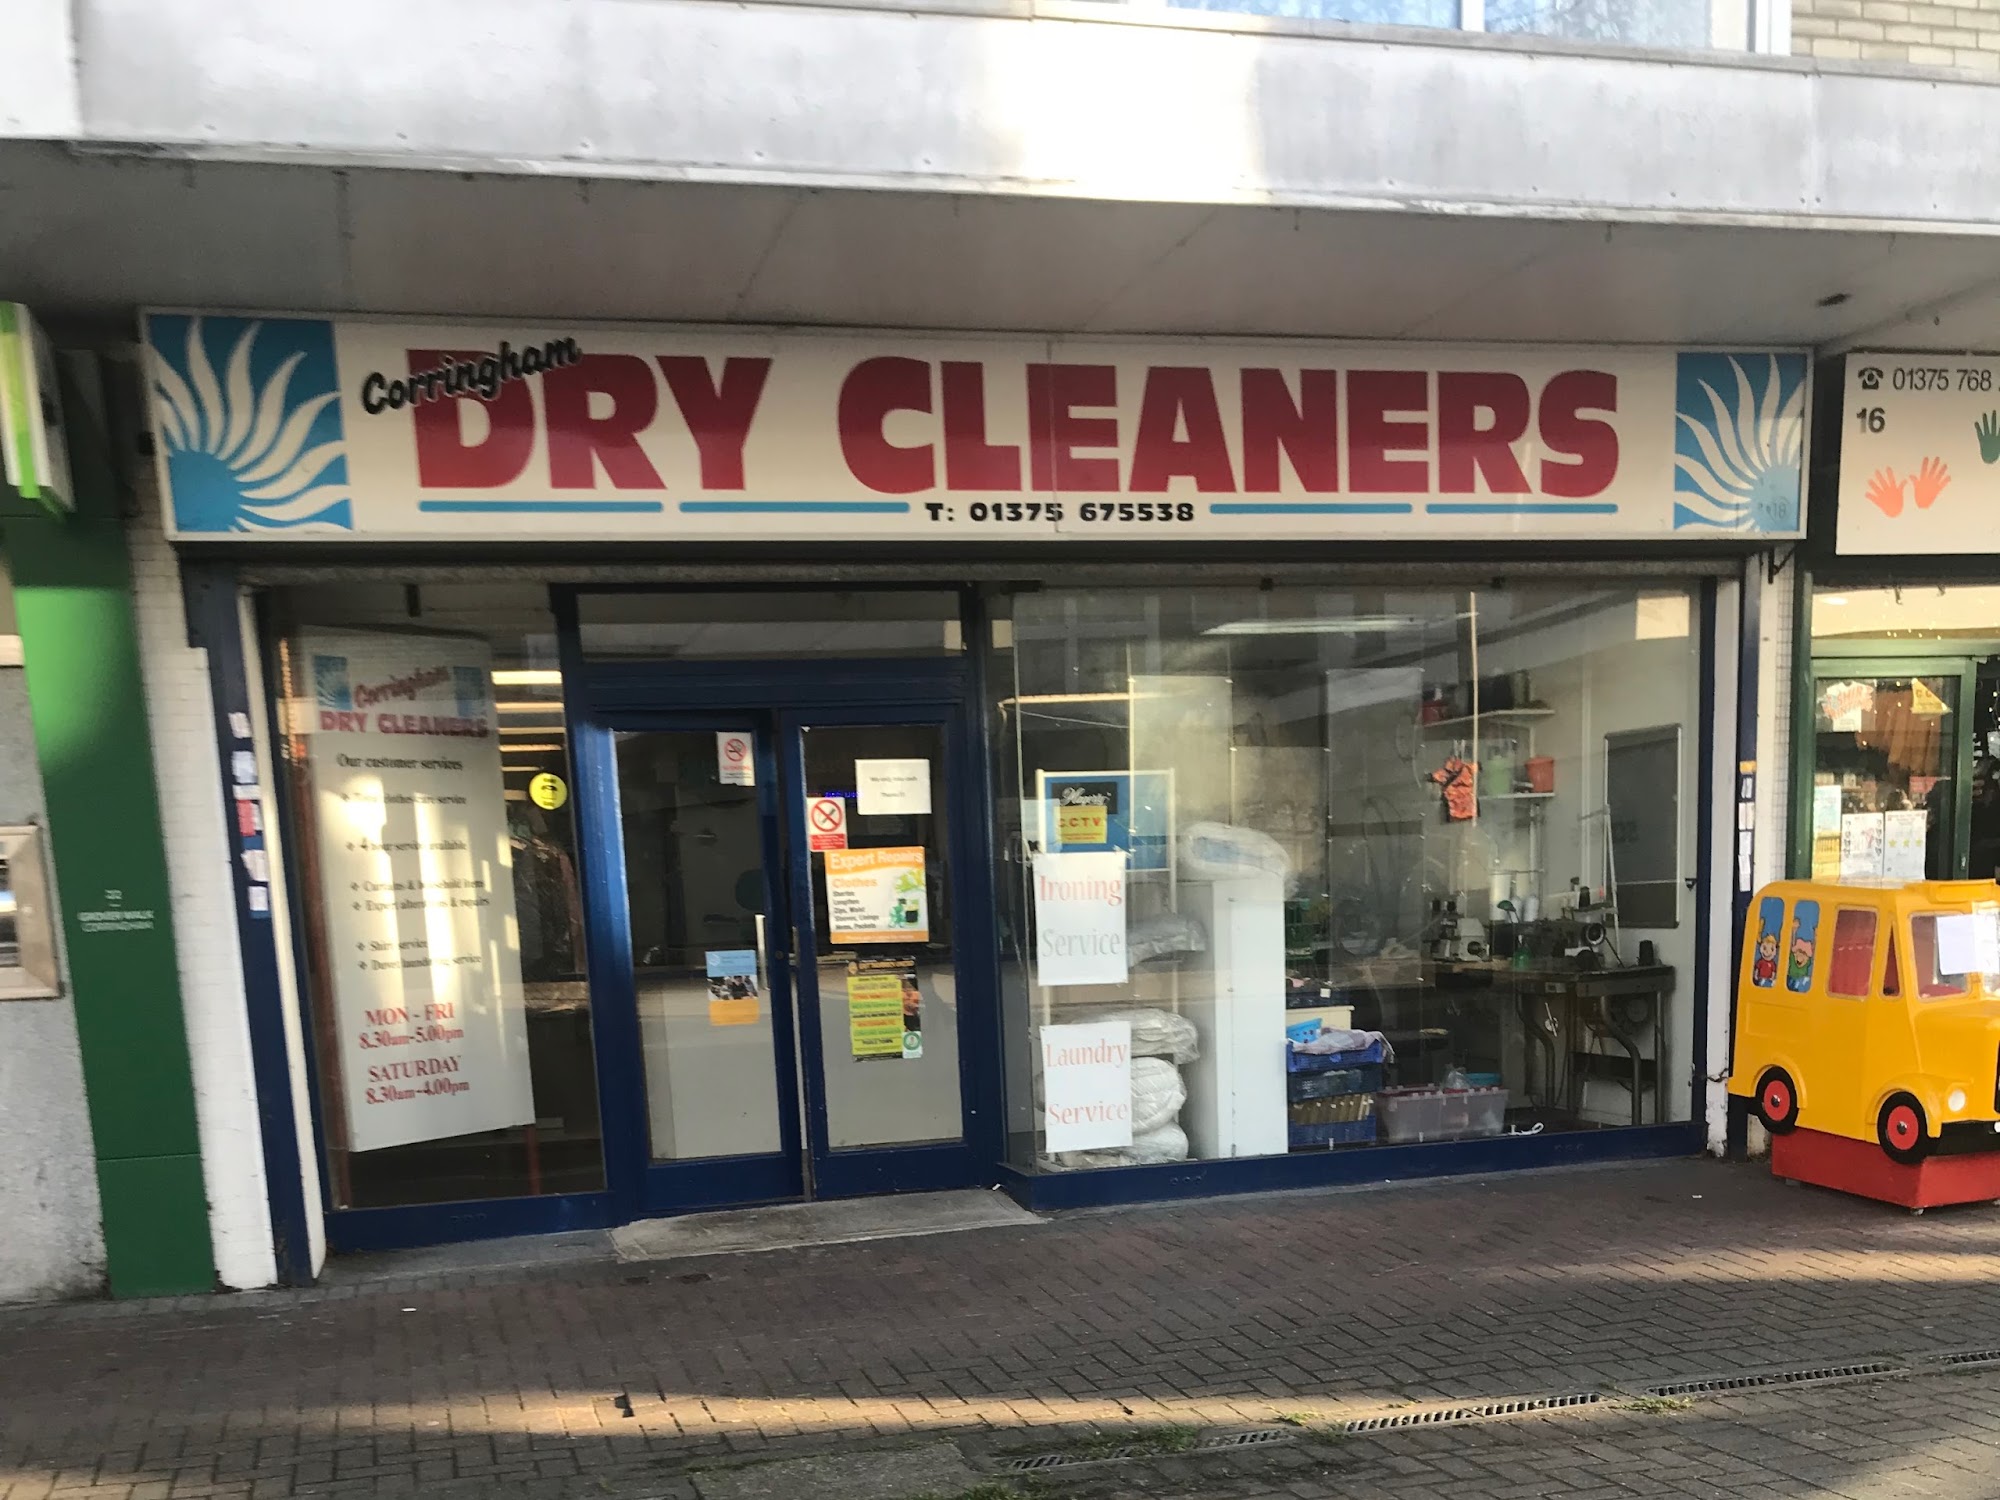 Corringham Dry Cleaners